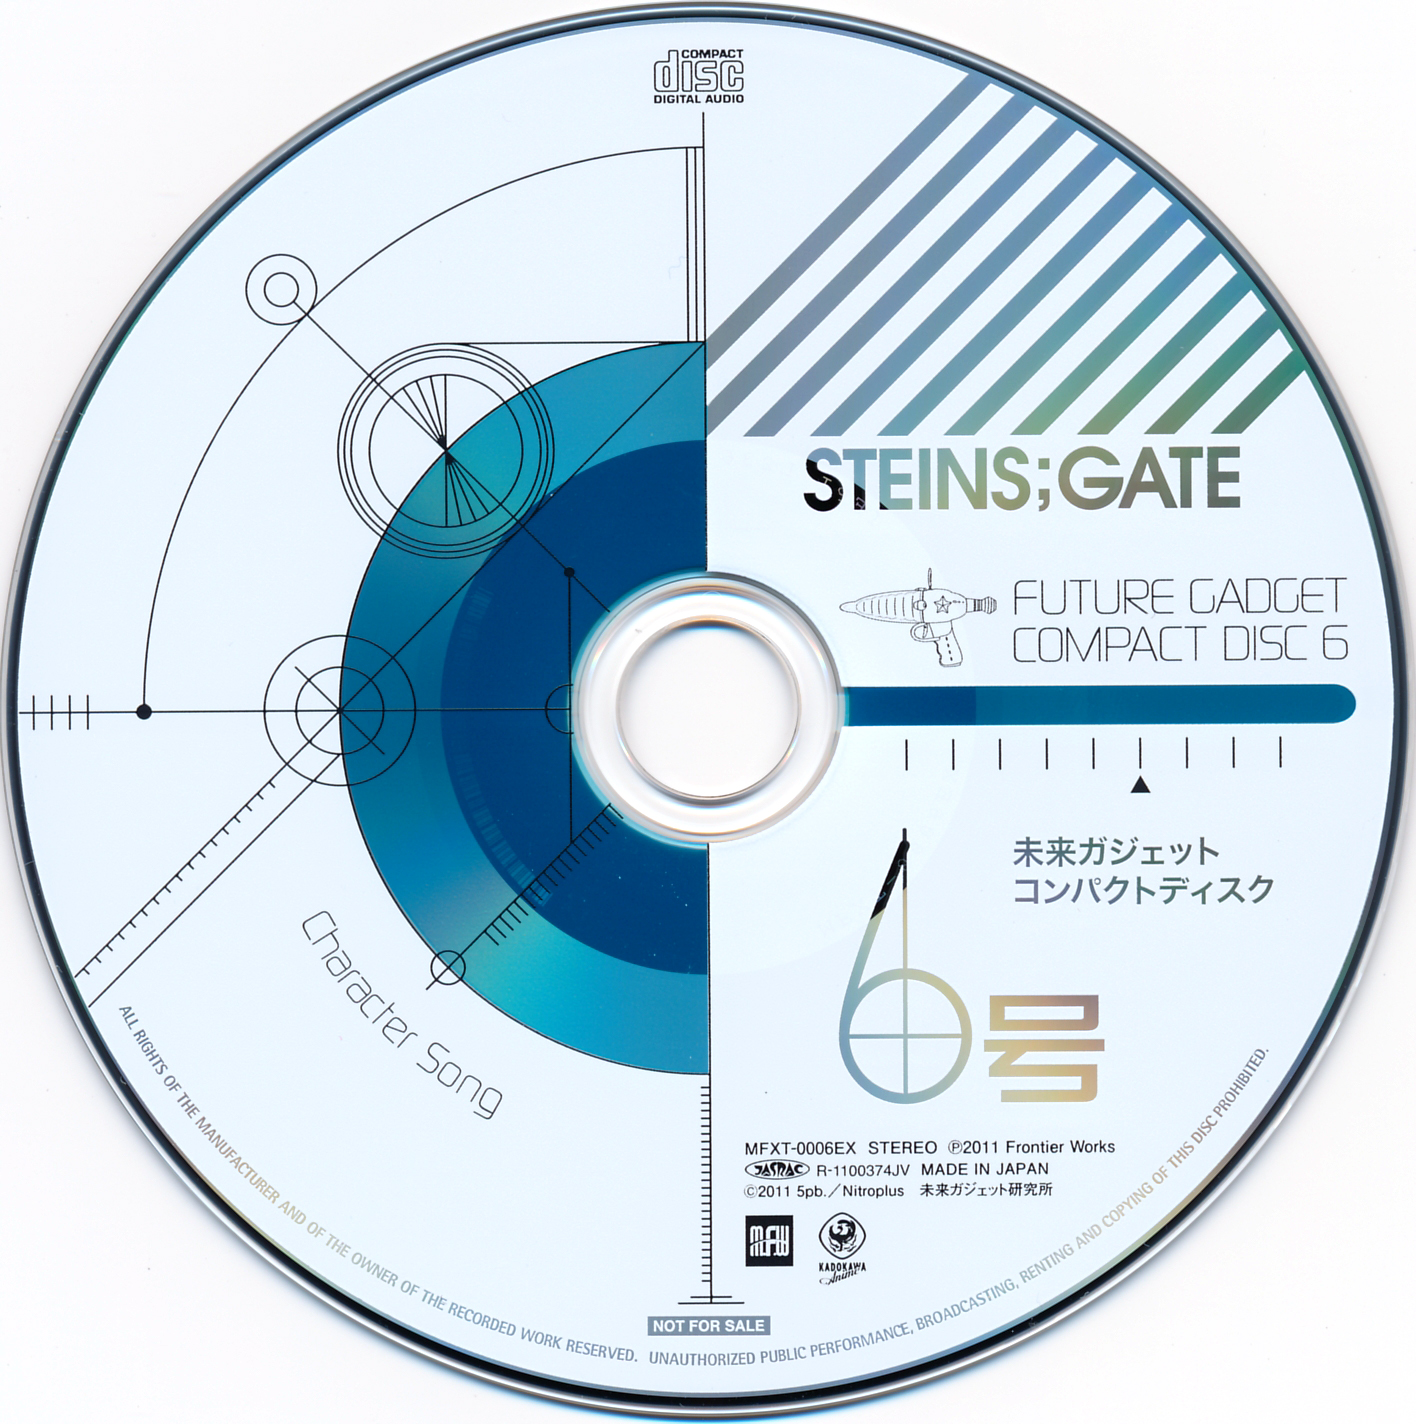 光碟-STEINS;GATE FUTURE GADGET COMPACT DISC 6.jpg